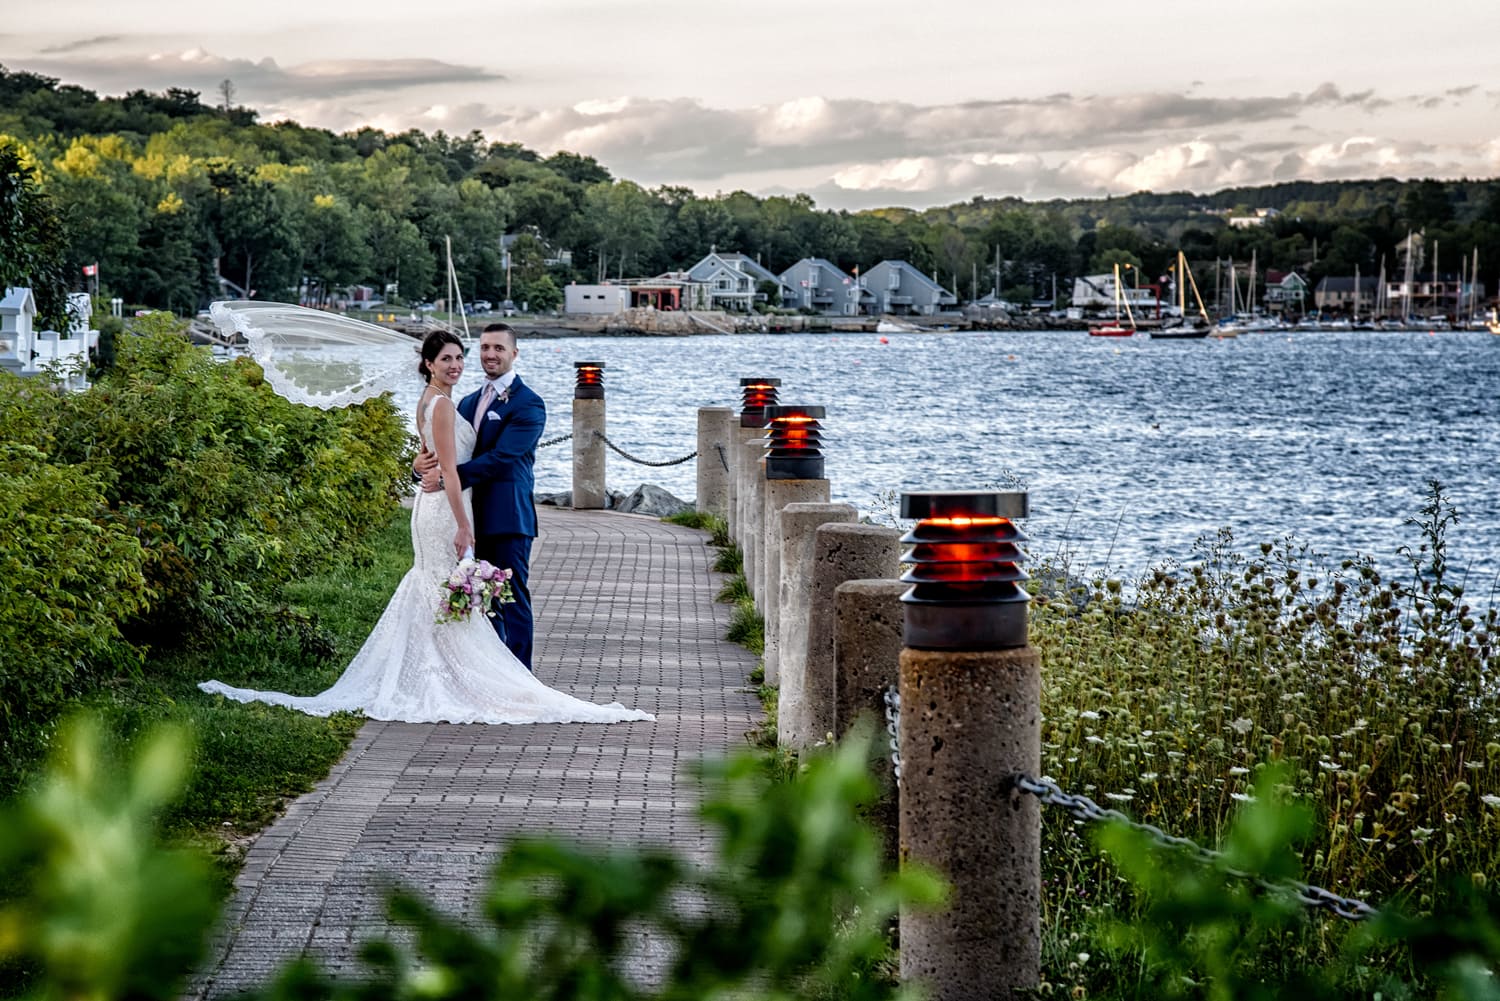 Halifax wedding photographer with the bride and groom for wedding photos on the halifax harbourfront in dewolfe park.